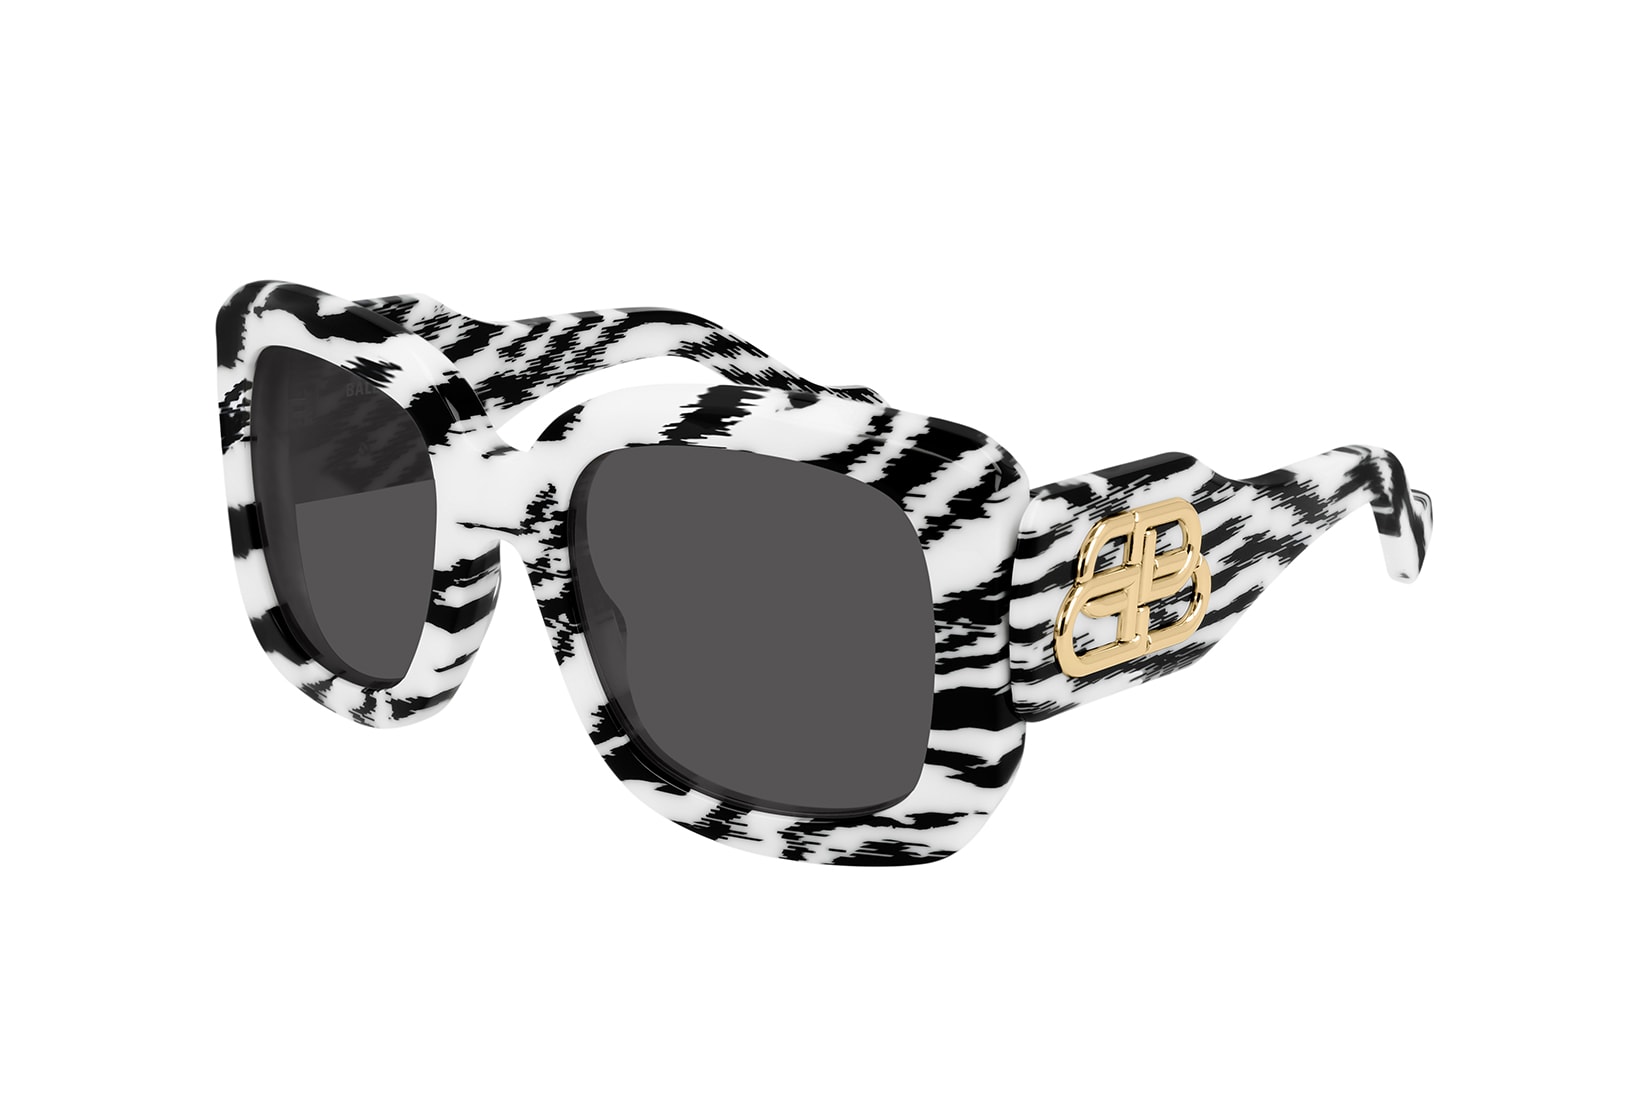 balenciaga kering sunglasses shades eyewear collection fall winter accessories paris